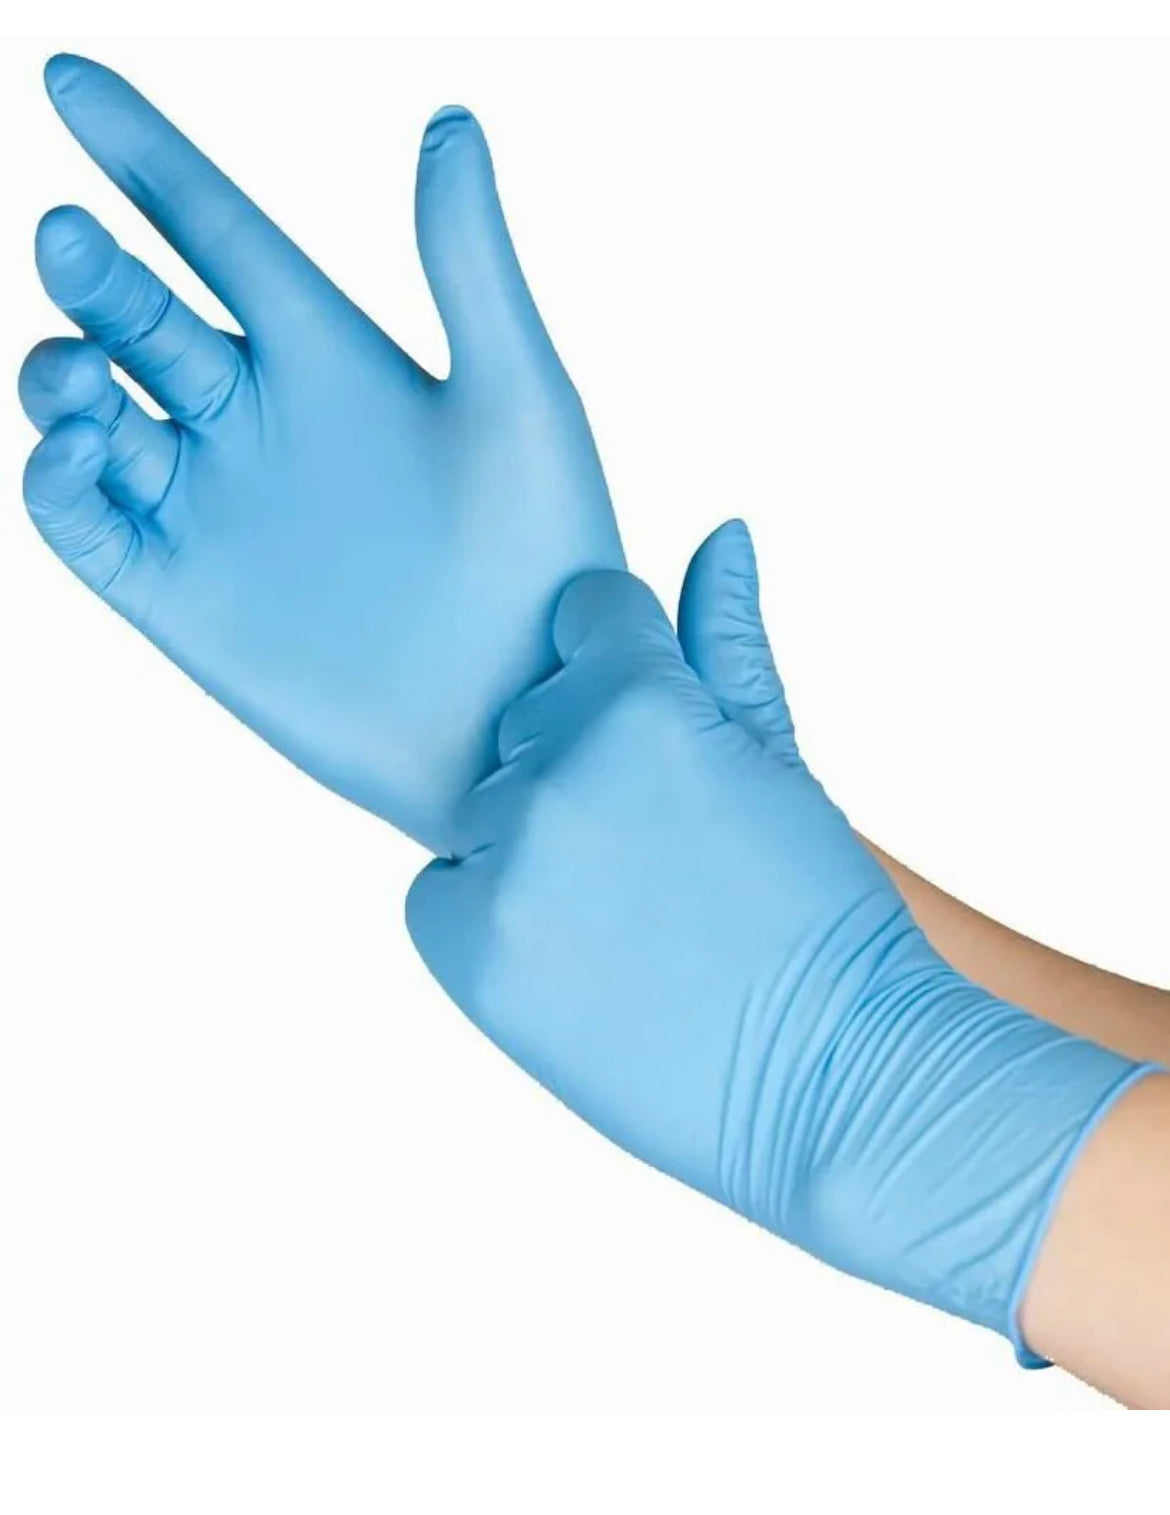 Wholesale Vinyl Nitrile Gloves